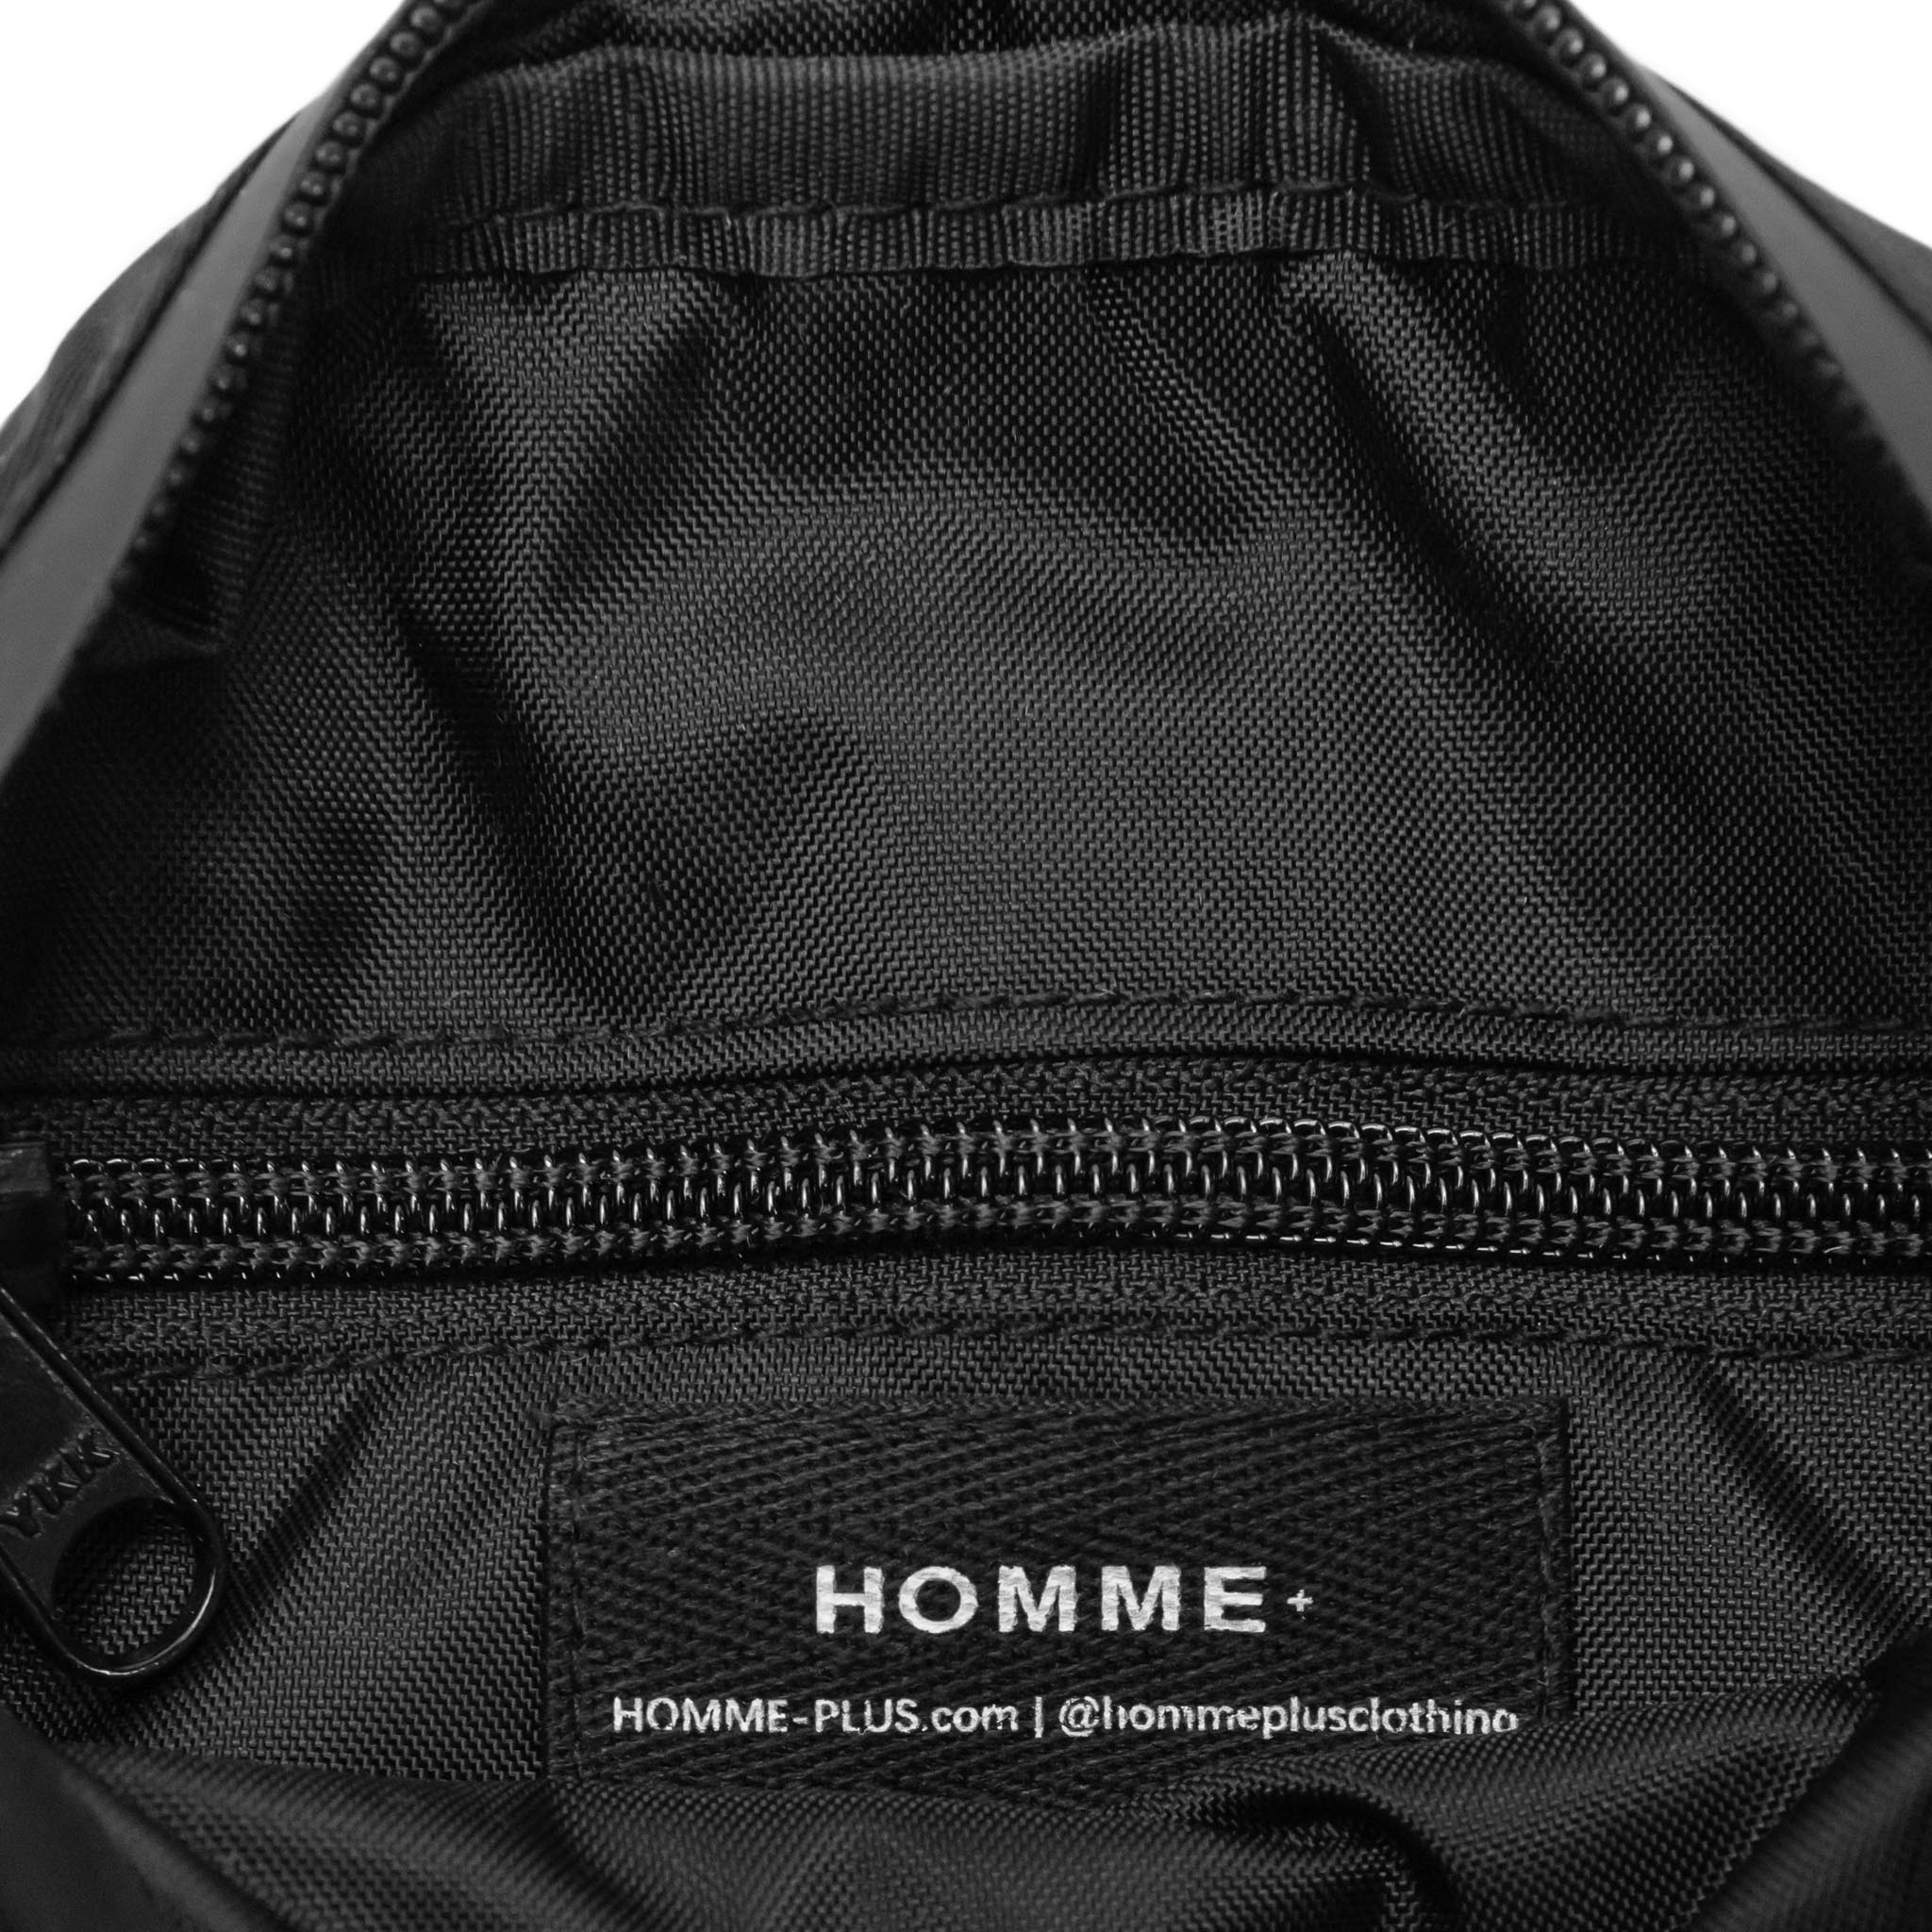 HOMME+ Small Side Bag Black